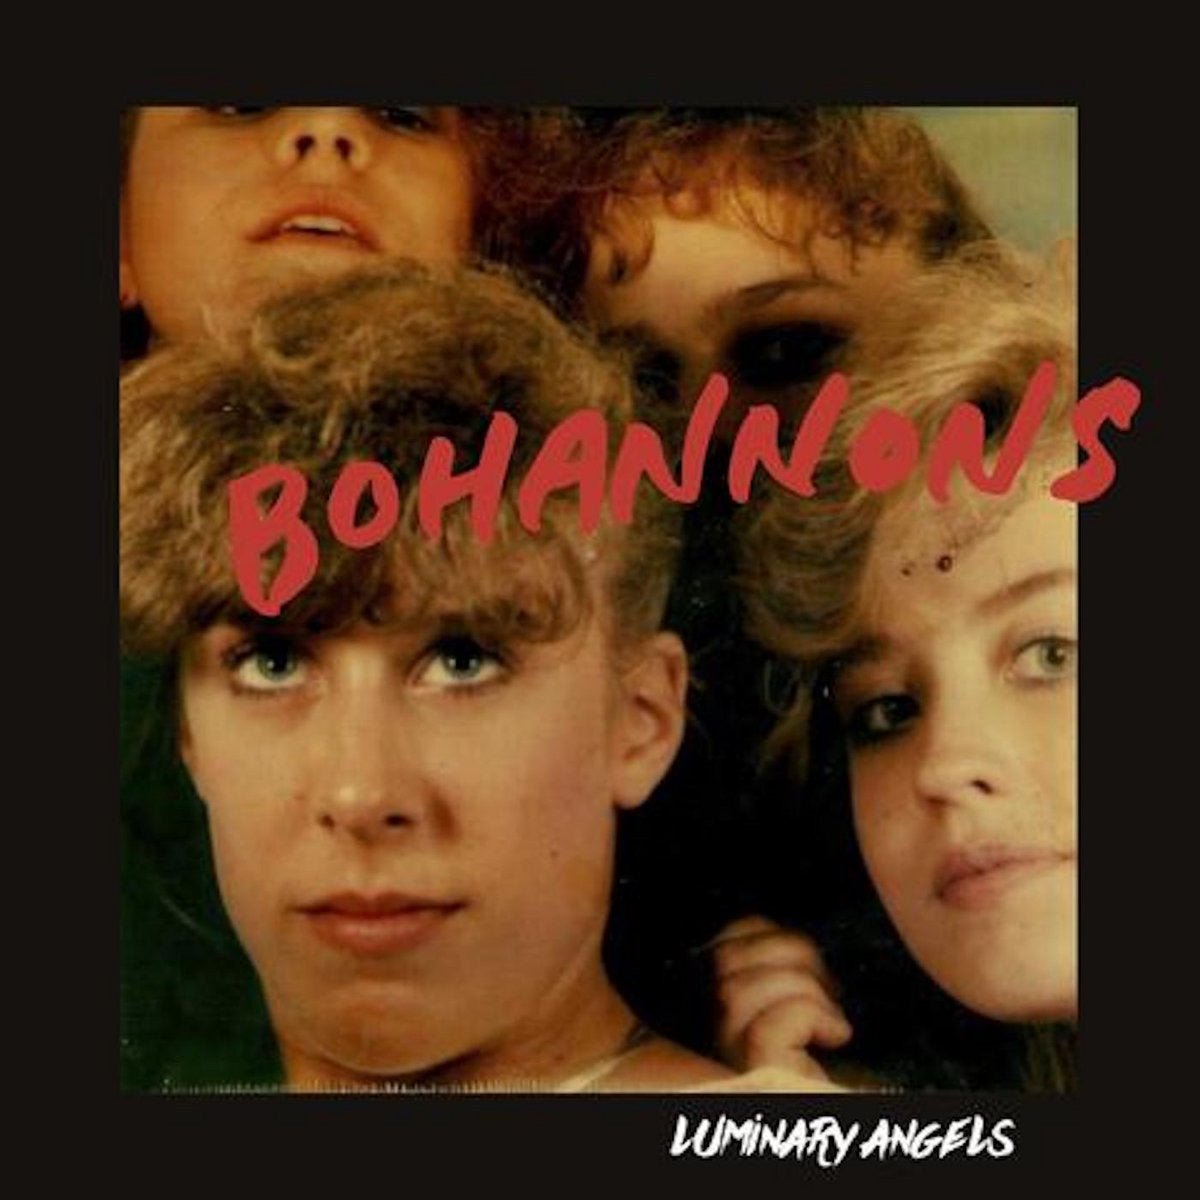 Bohannons, The - Luminary Angels (CD) - N - Bohannons, The - Luminary Angels (CD) - CD's - Yellow Racket Records